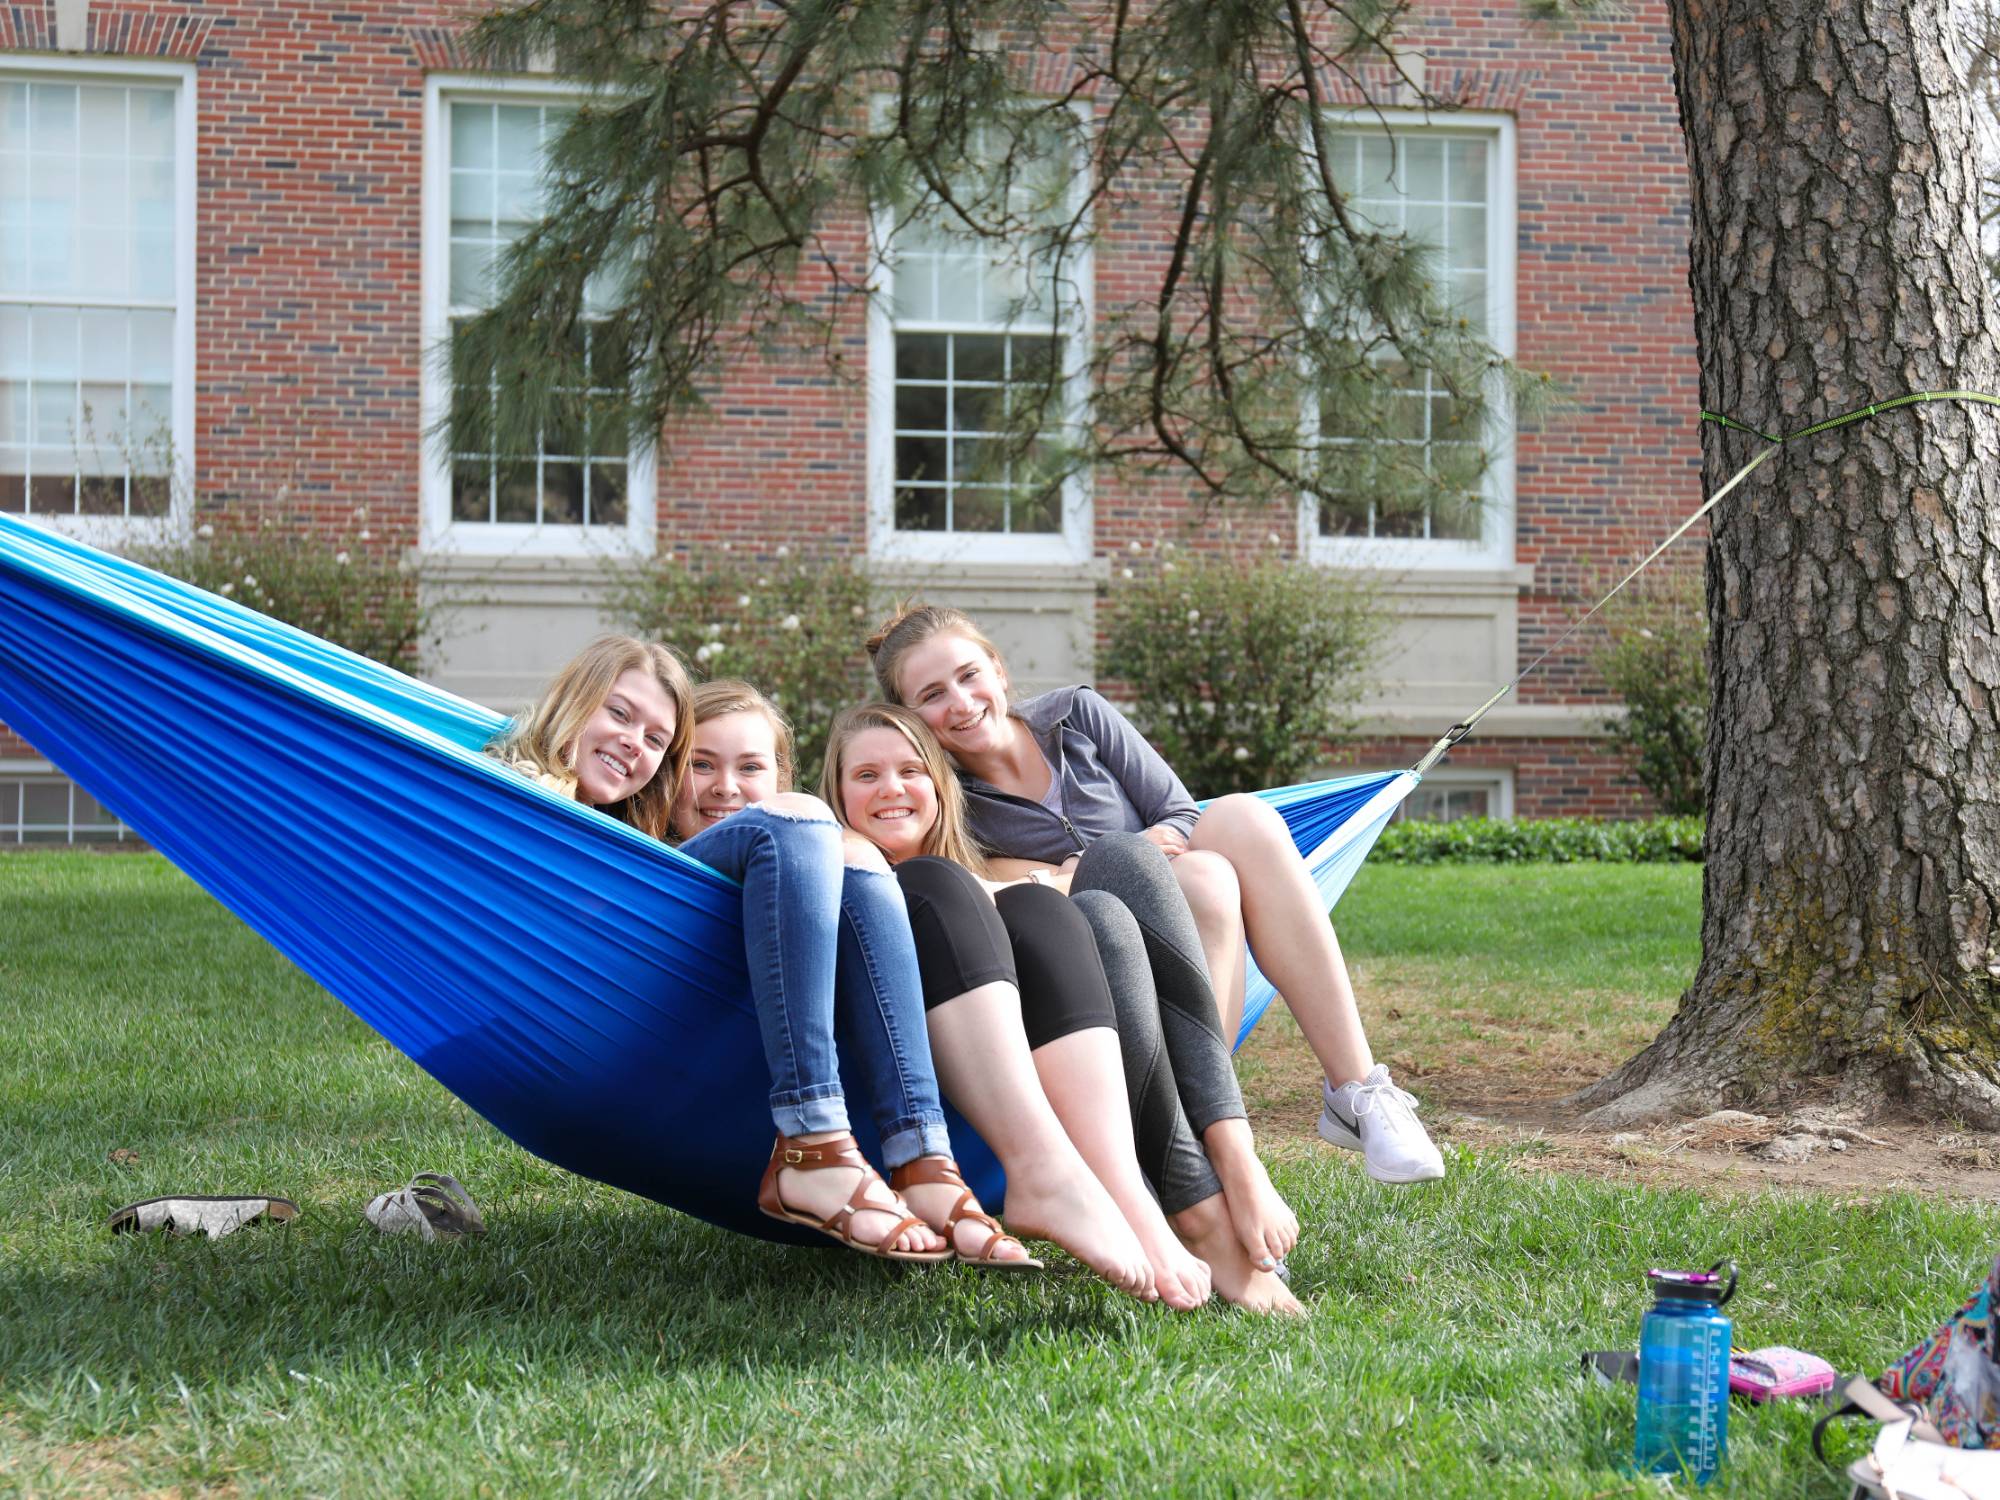 Girls hanging in hammock.